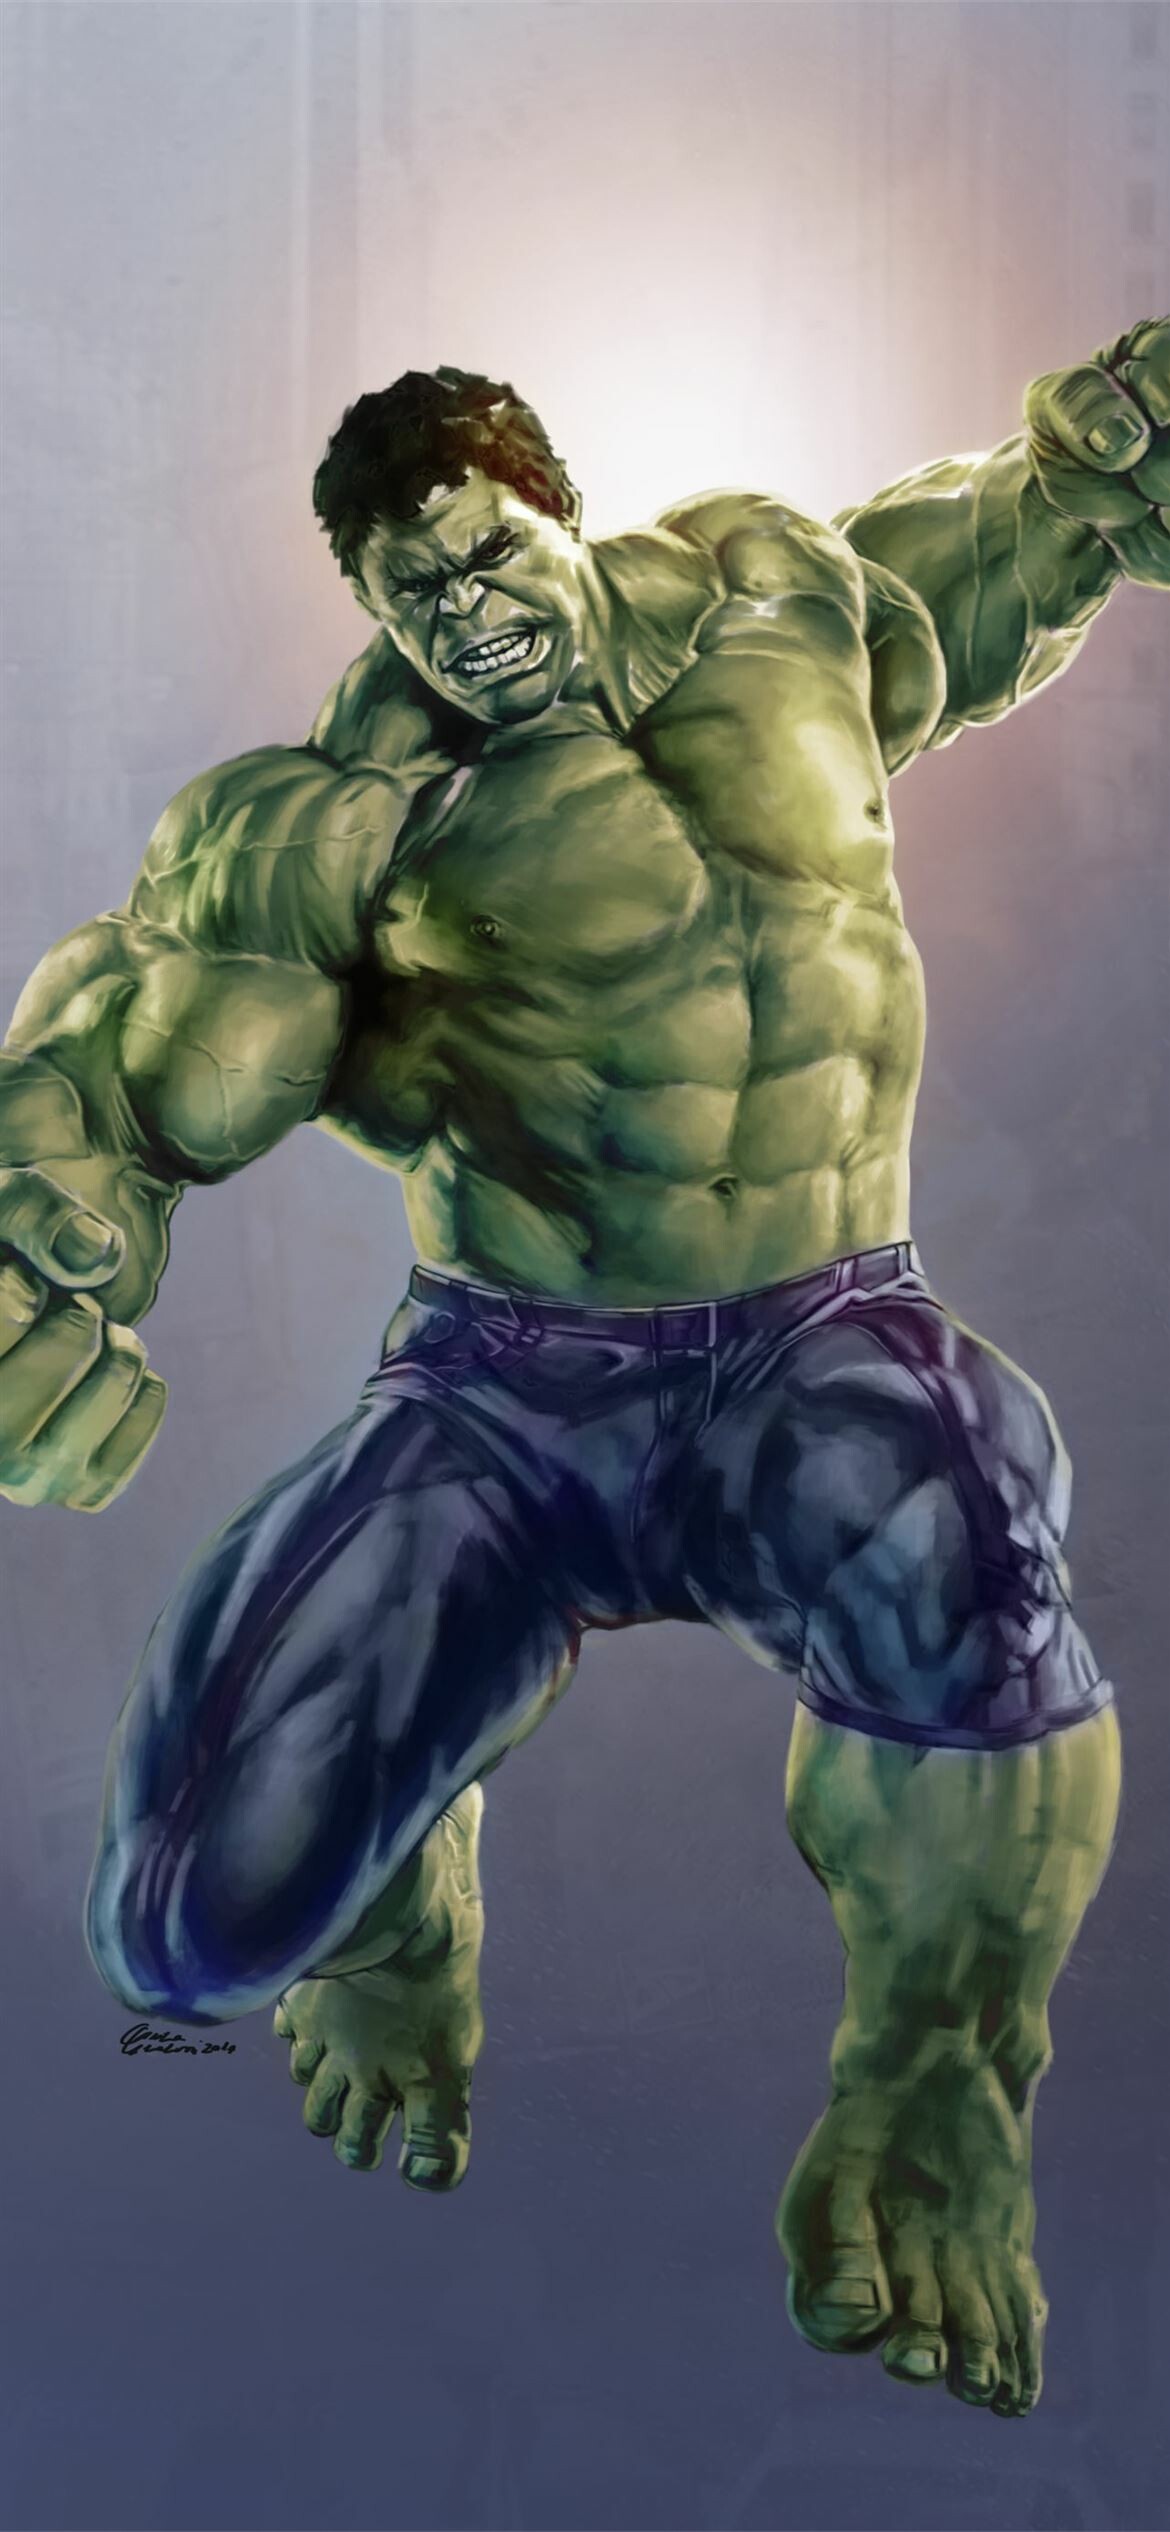 Hulk: The Incredible Hulk, 2008, Produced by Marvel Studios. 1170x2540 HD Wallpaper.